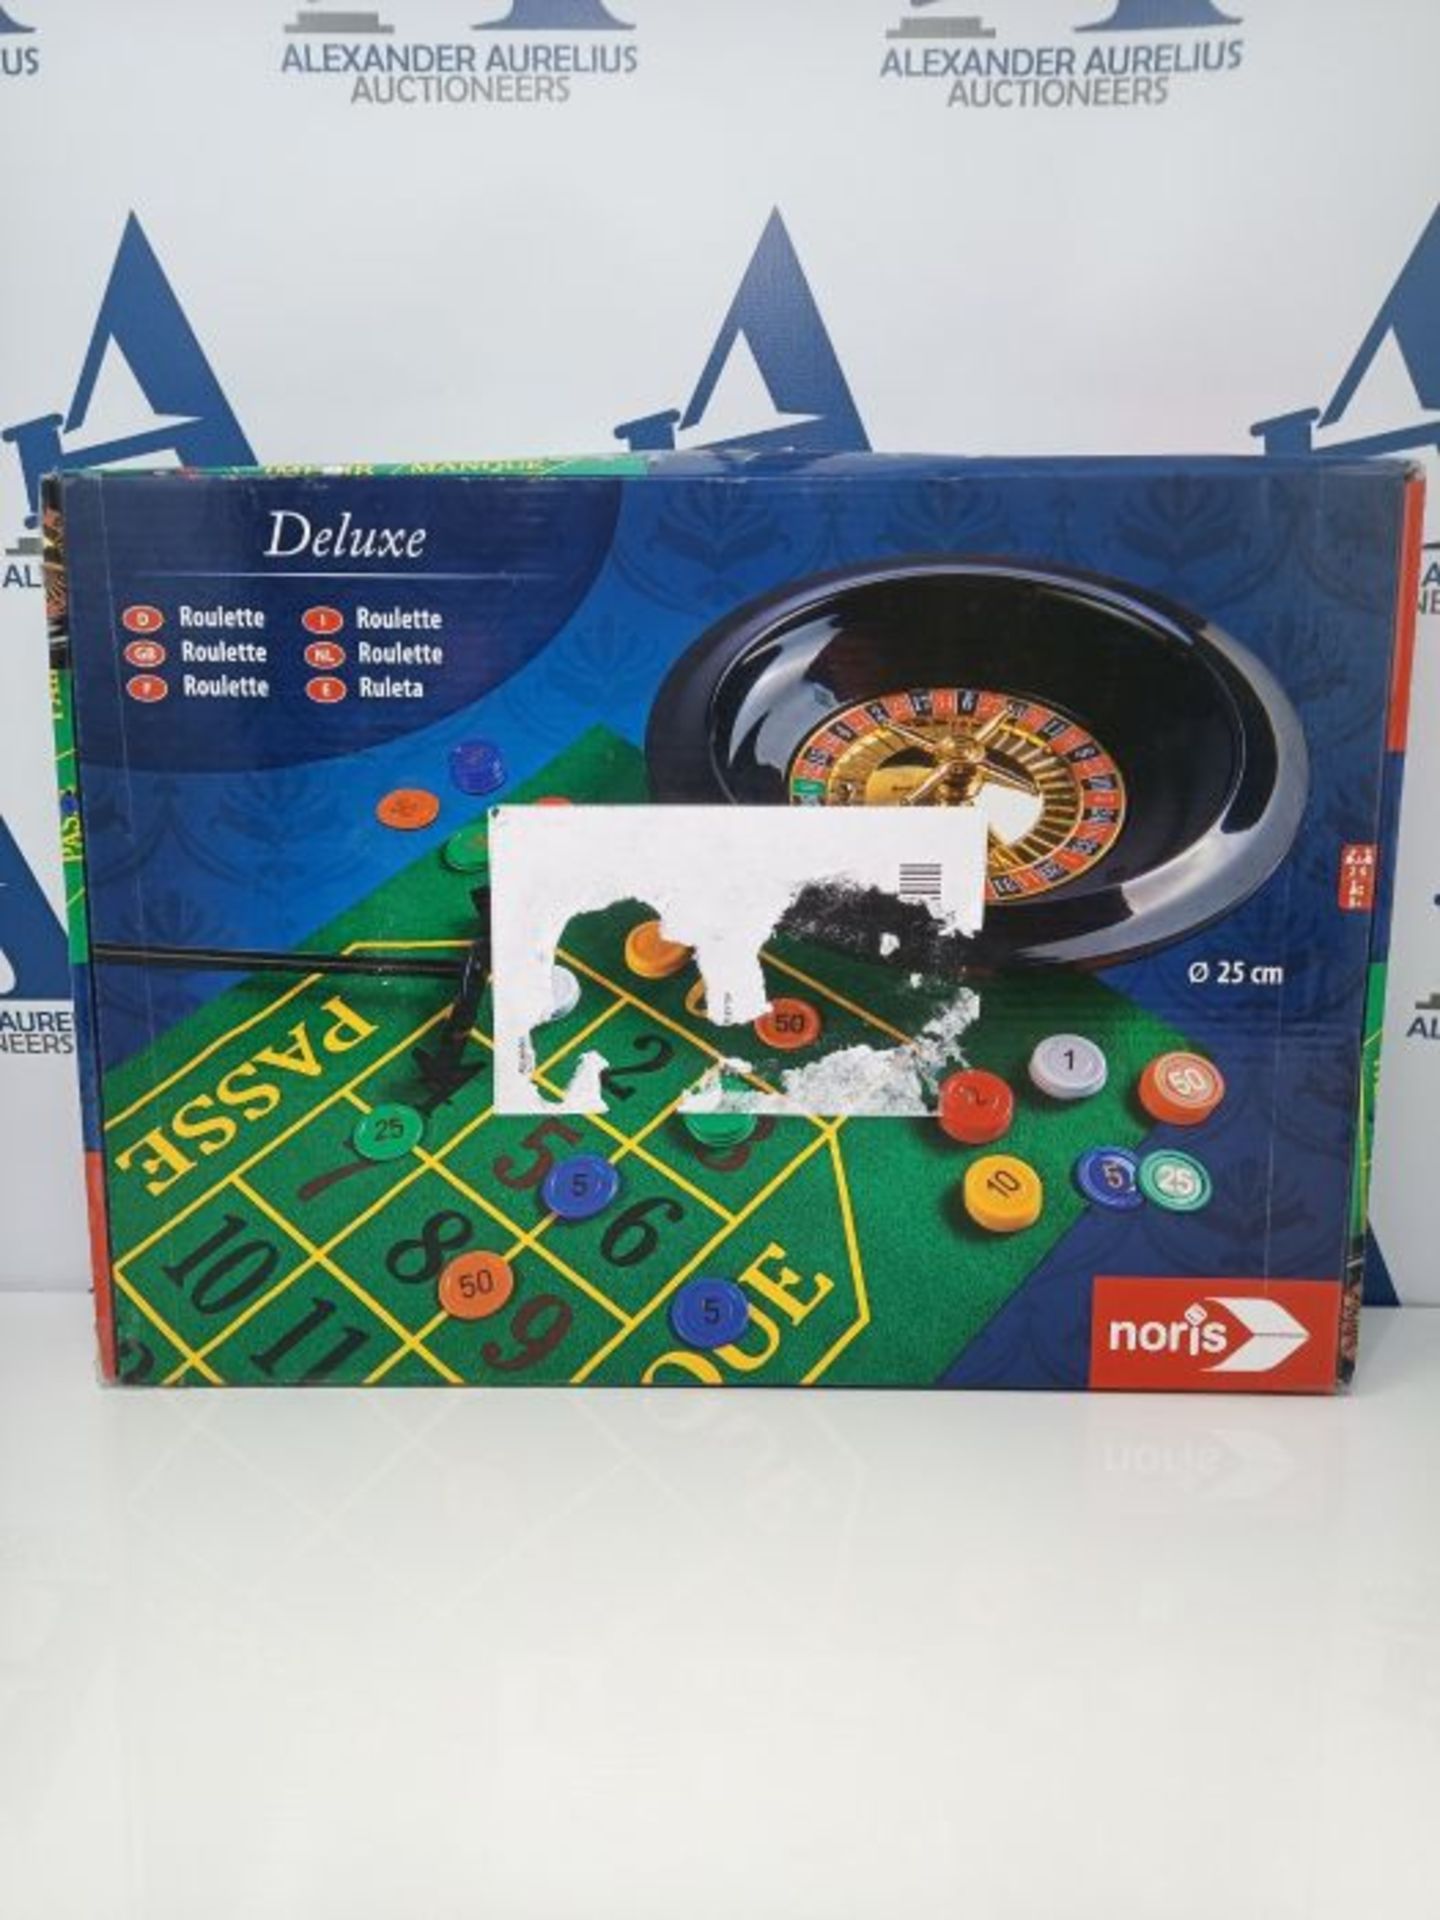 Deluxe 25 cm "Roulette" Classic Game (Multi-Colour) - Image 2 of 3